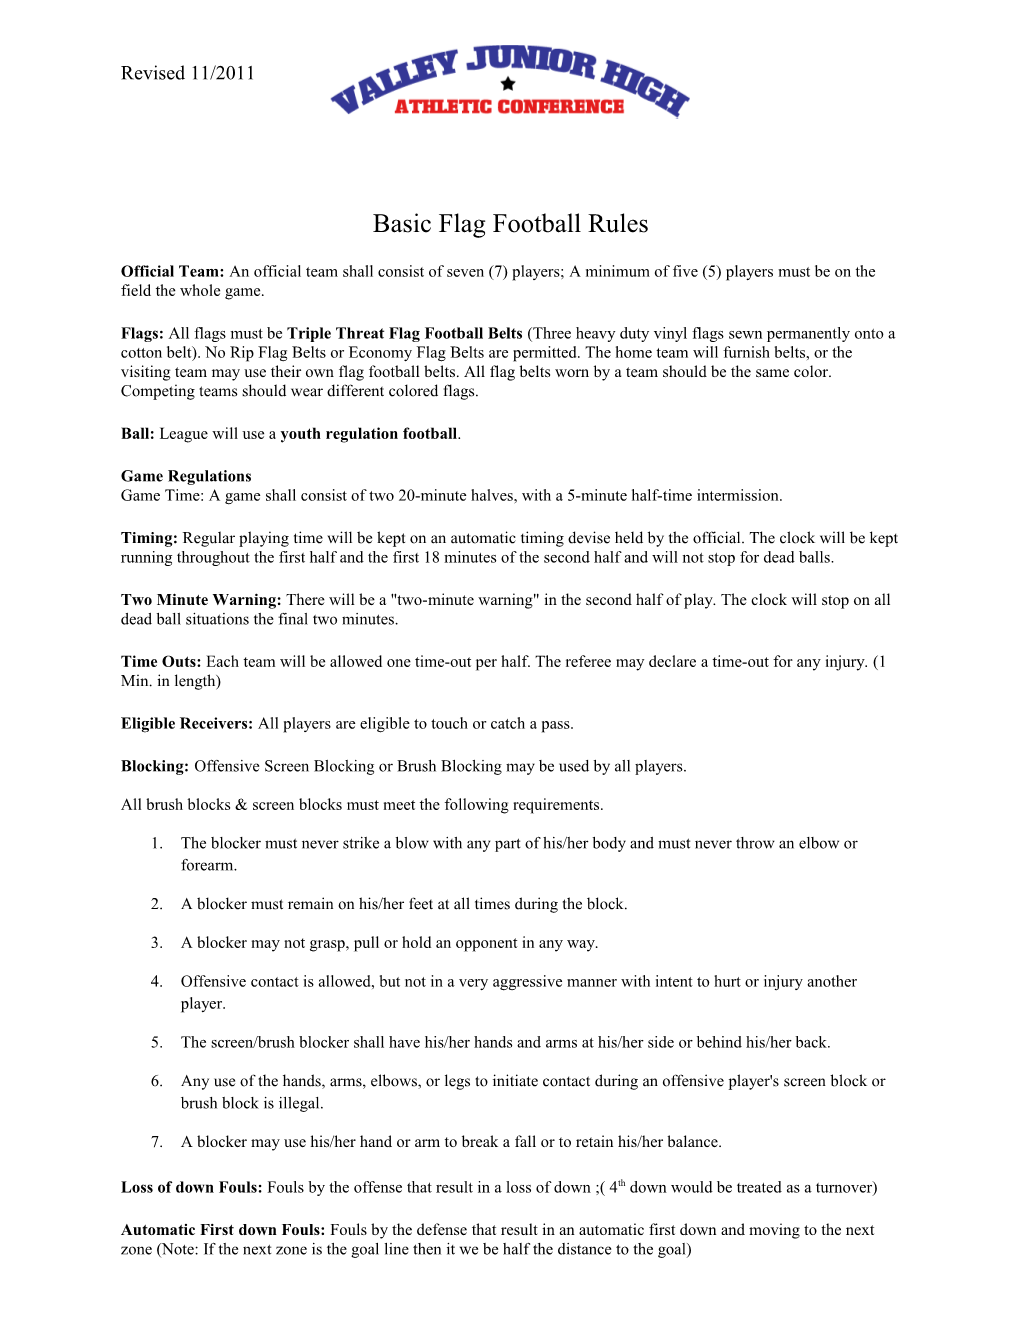 Basic Flag Football Rules